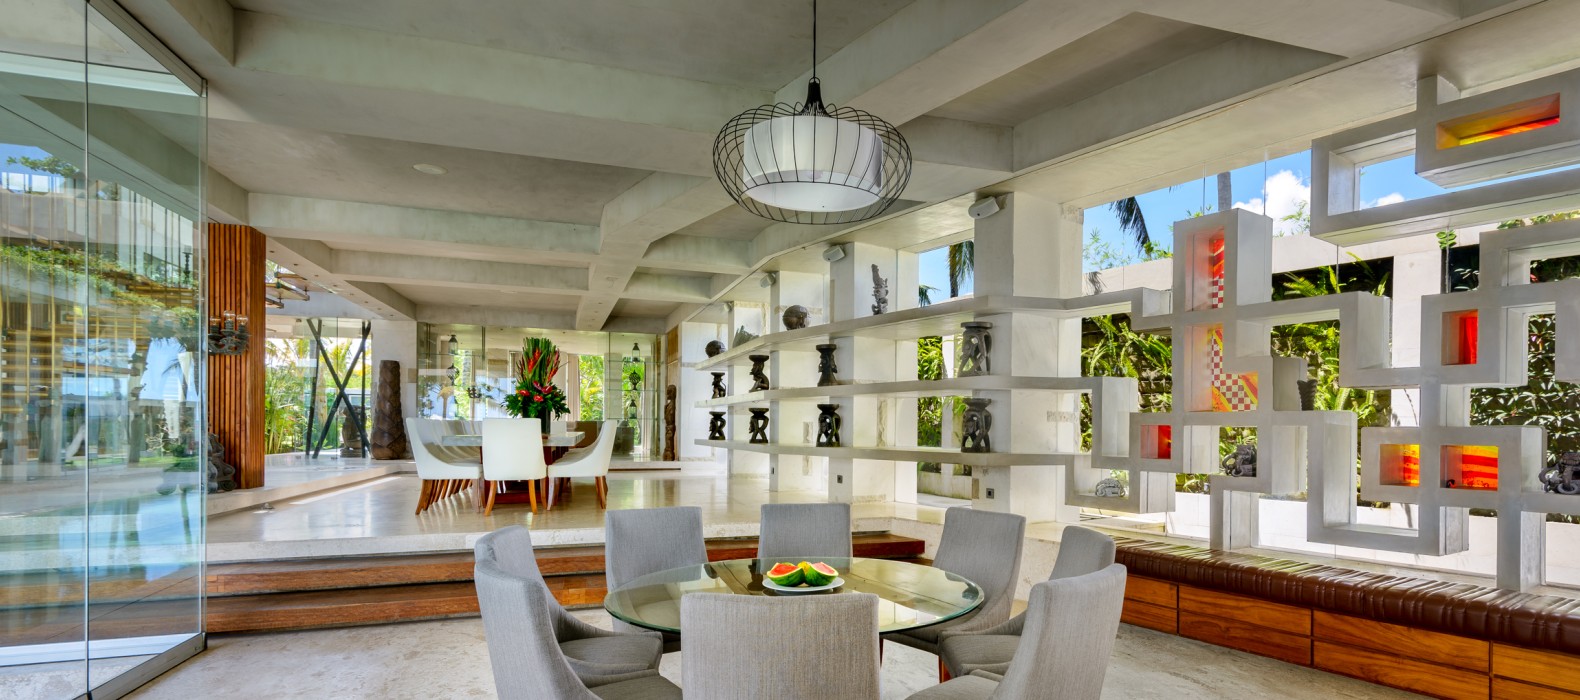 Dining area view of Villa La Vela in Bali